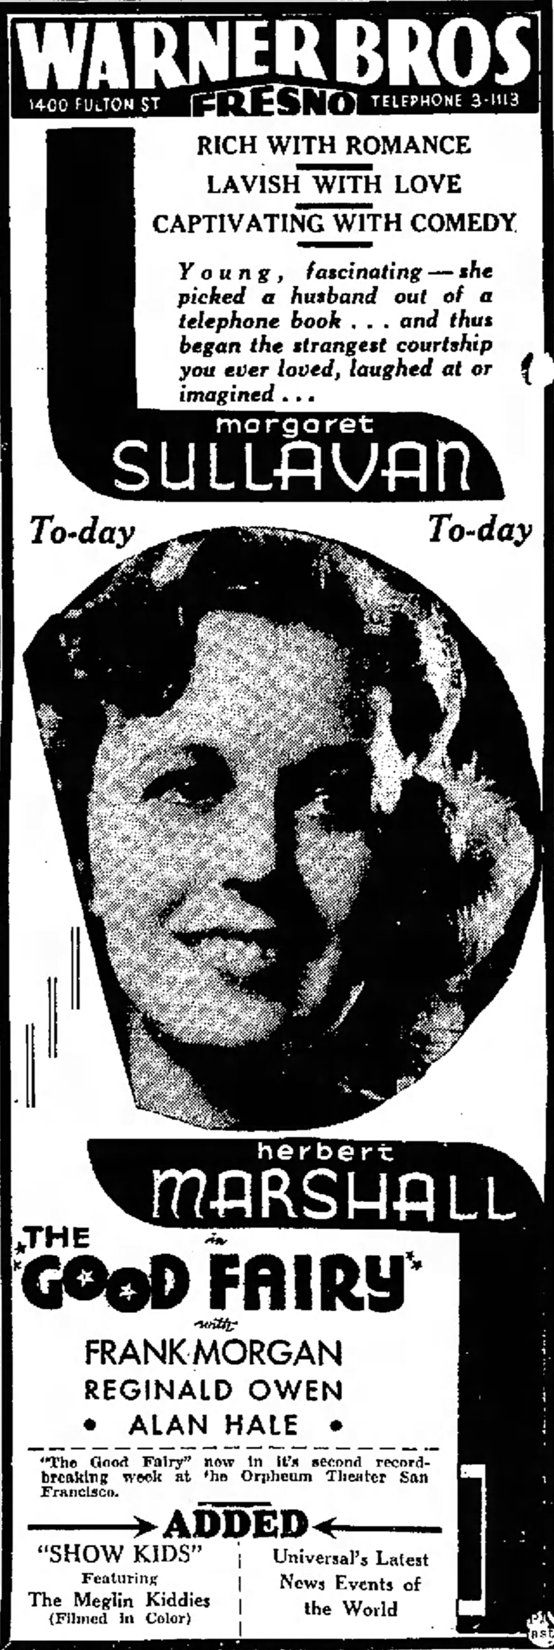 The Good Fairy 1935 newspaper ad